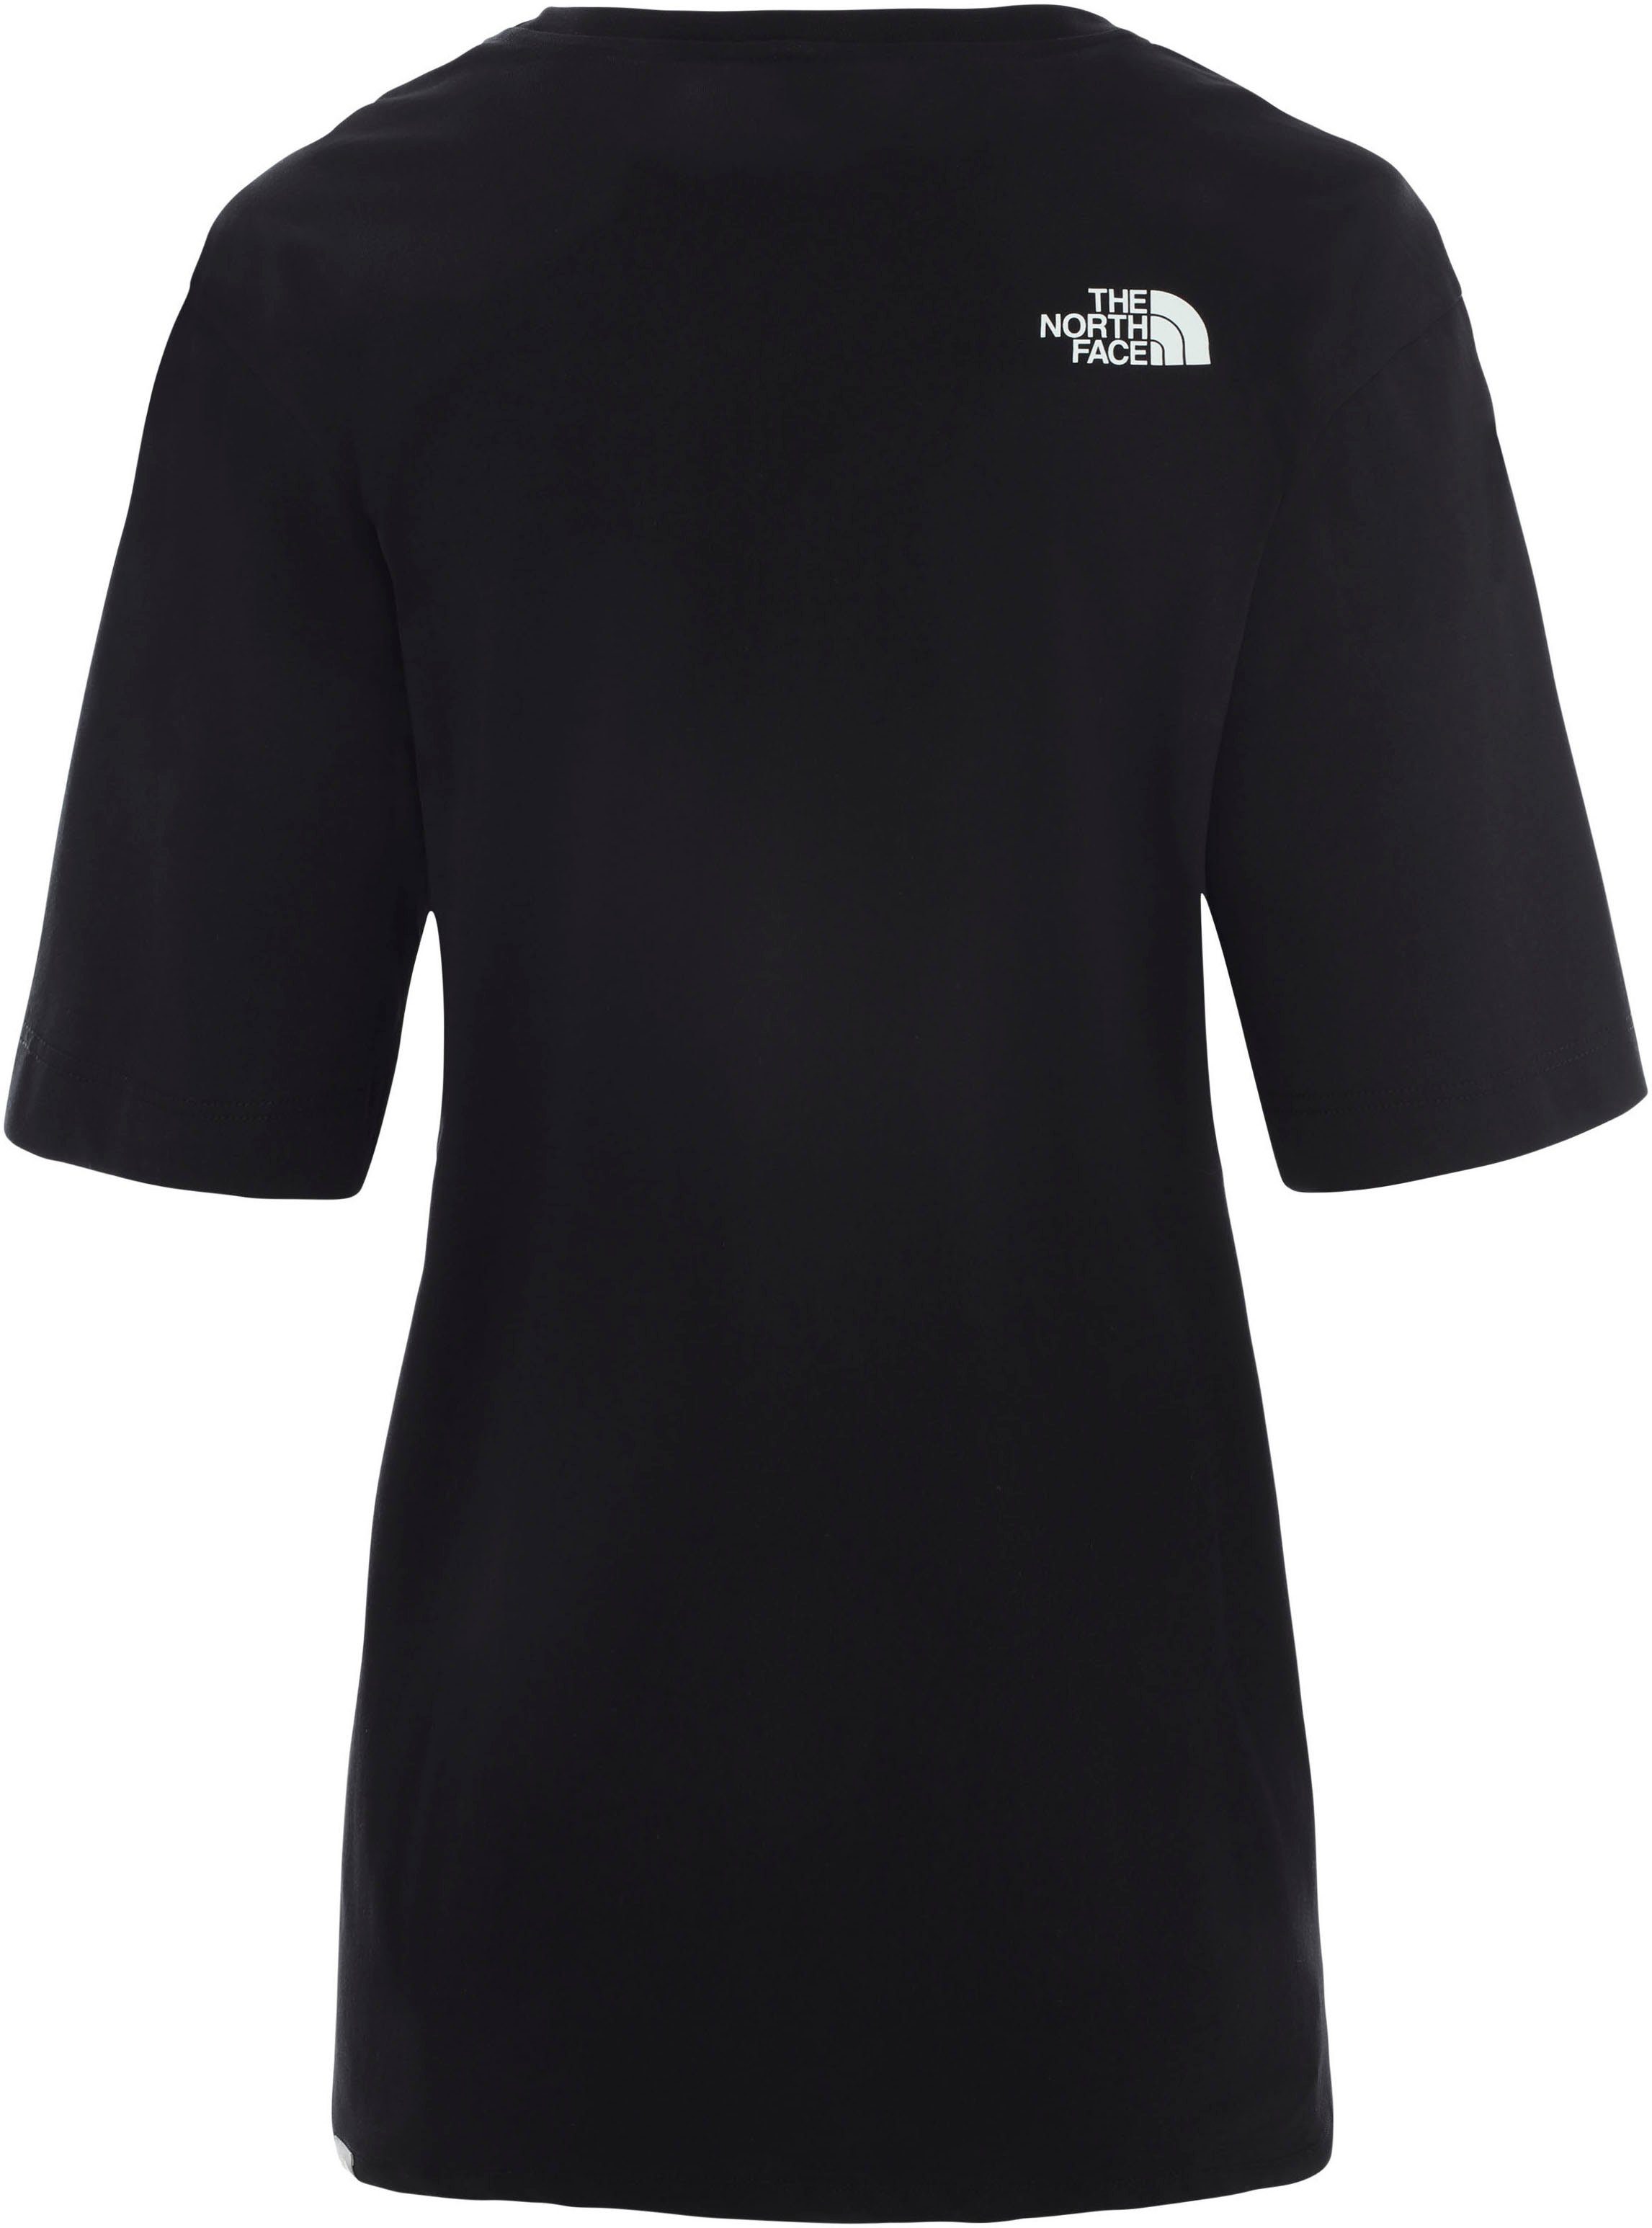 The North Face der Brust W RELAXED EASY TEE black Logodruck auf mit T-Shirt